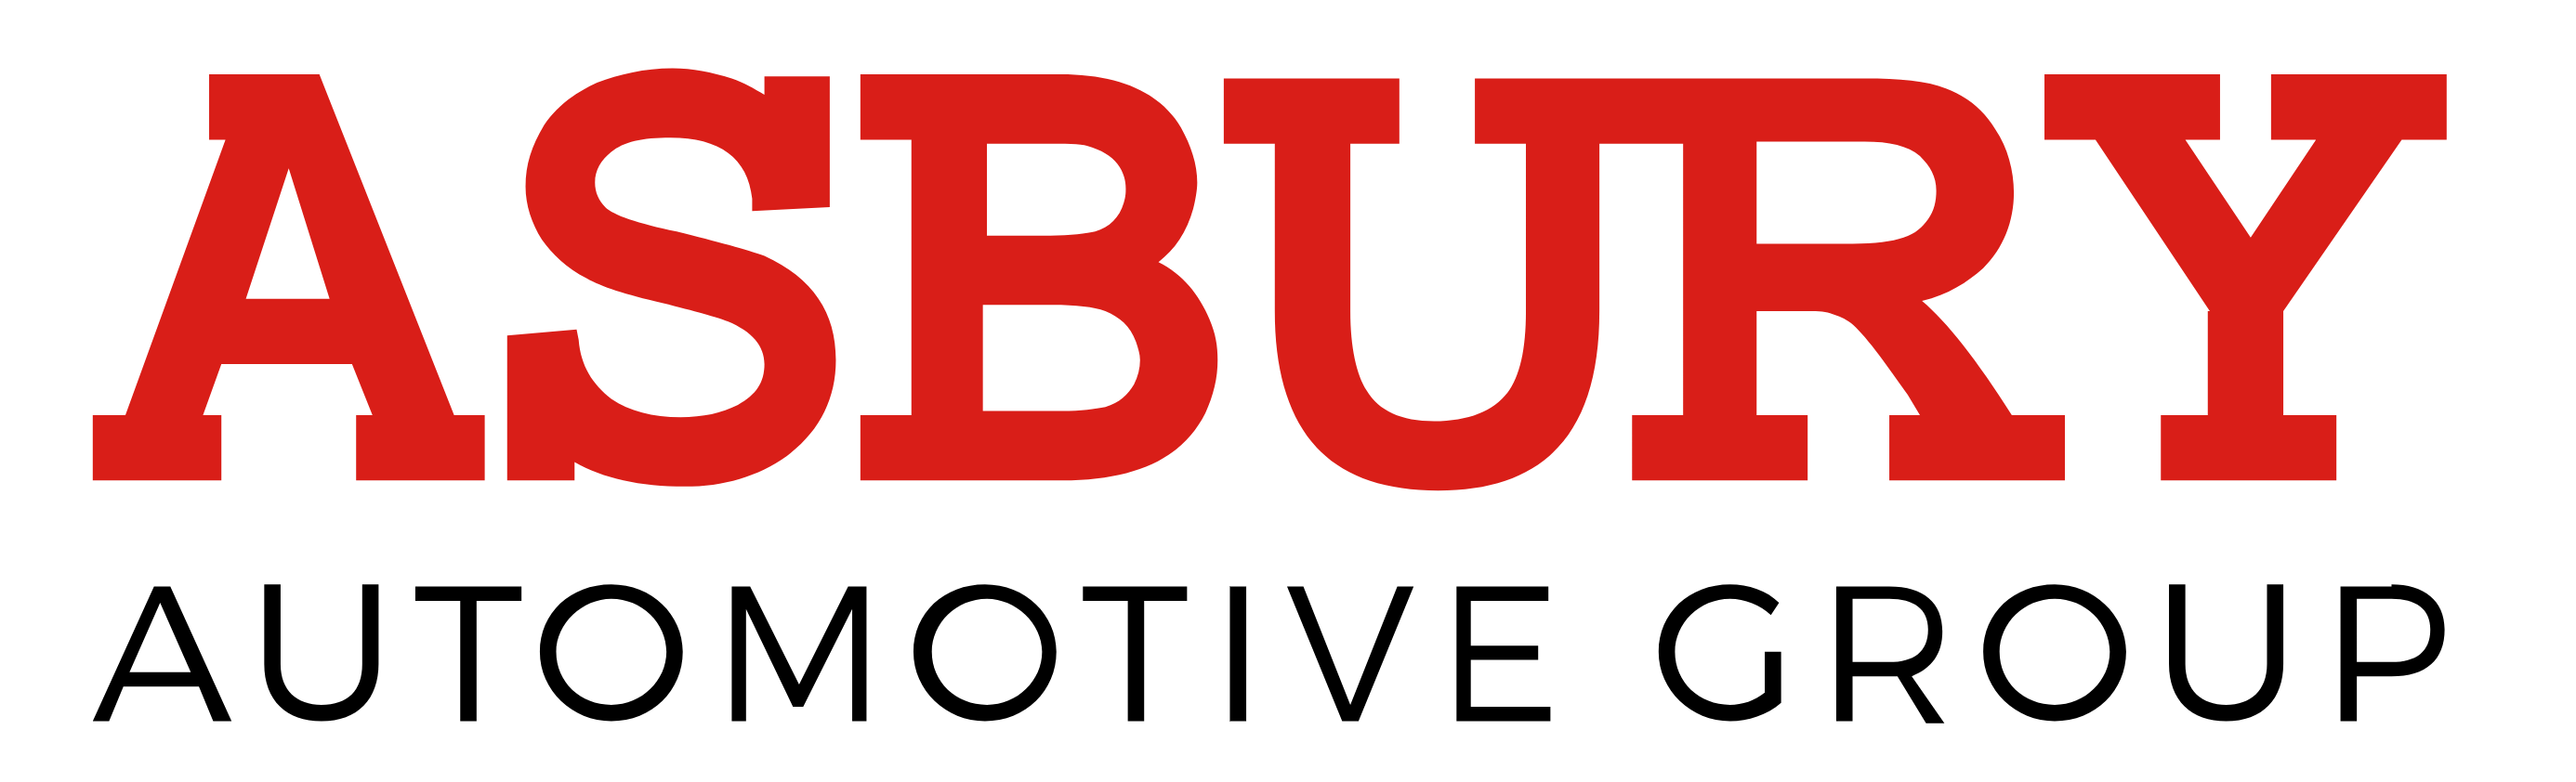 Red Oval Automotive Logo - Asbury Automotive Group Potentially Undervalued Despite ...